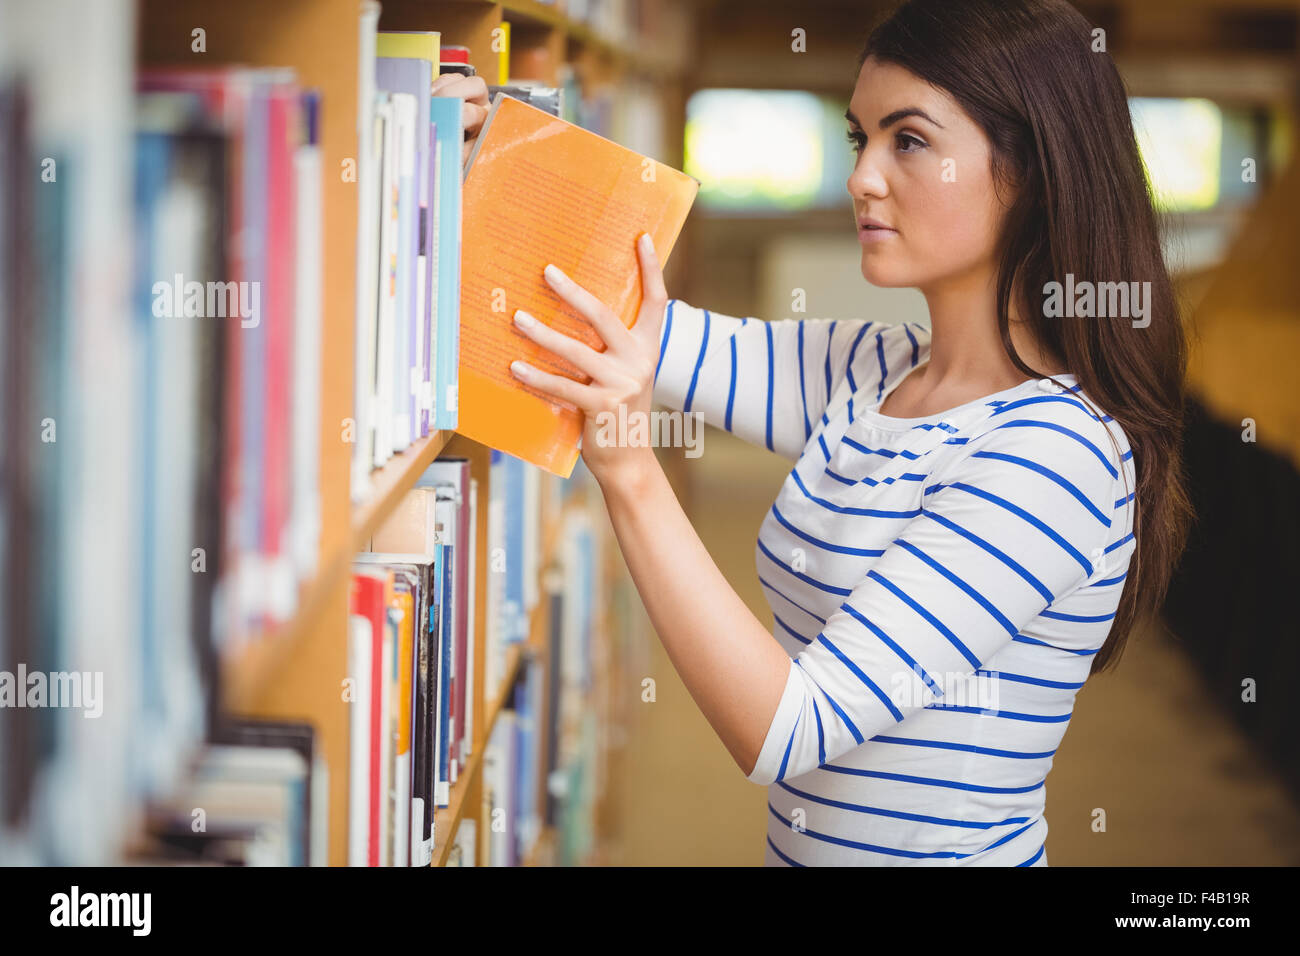 Female student choosing book Stock Photo